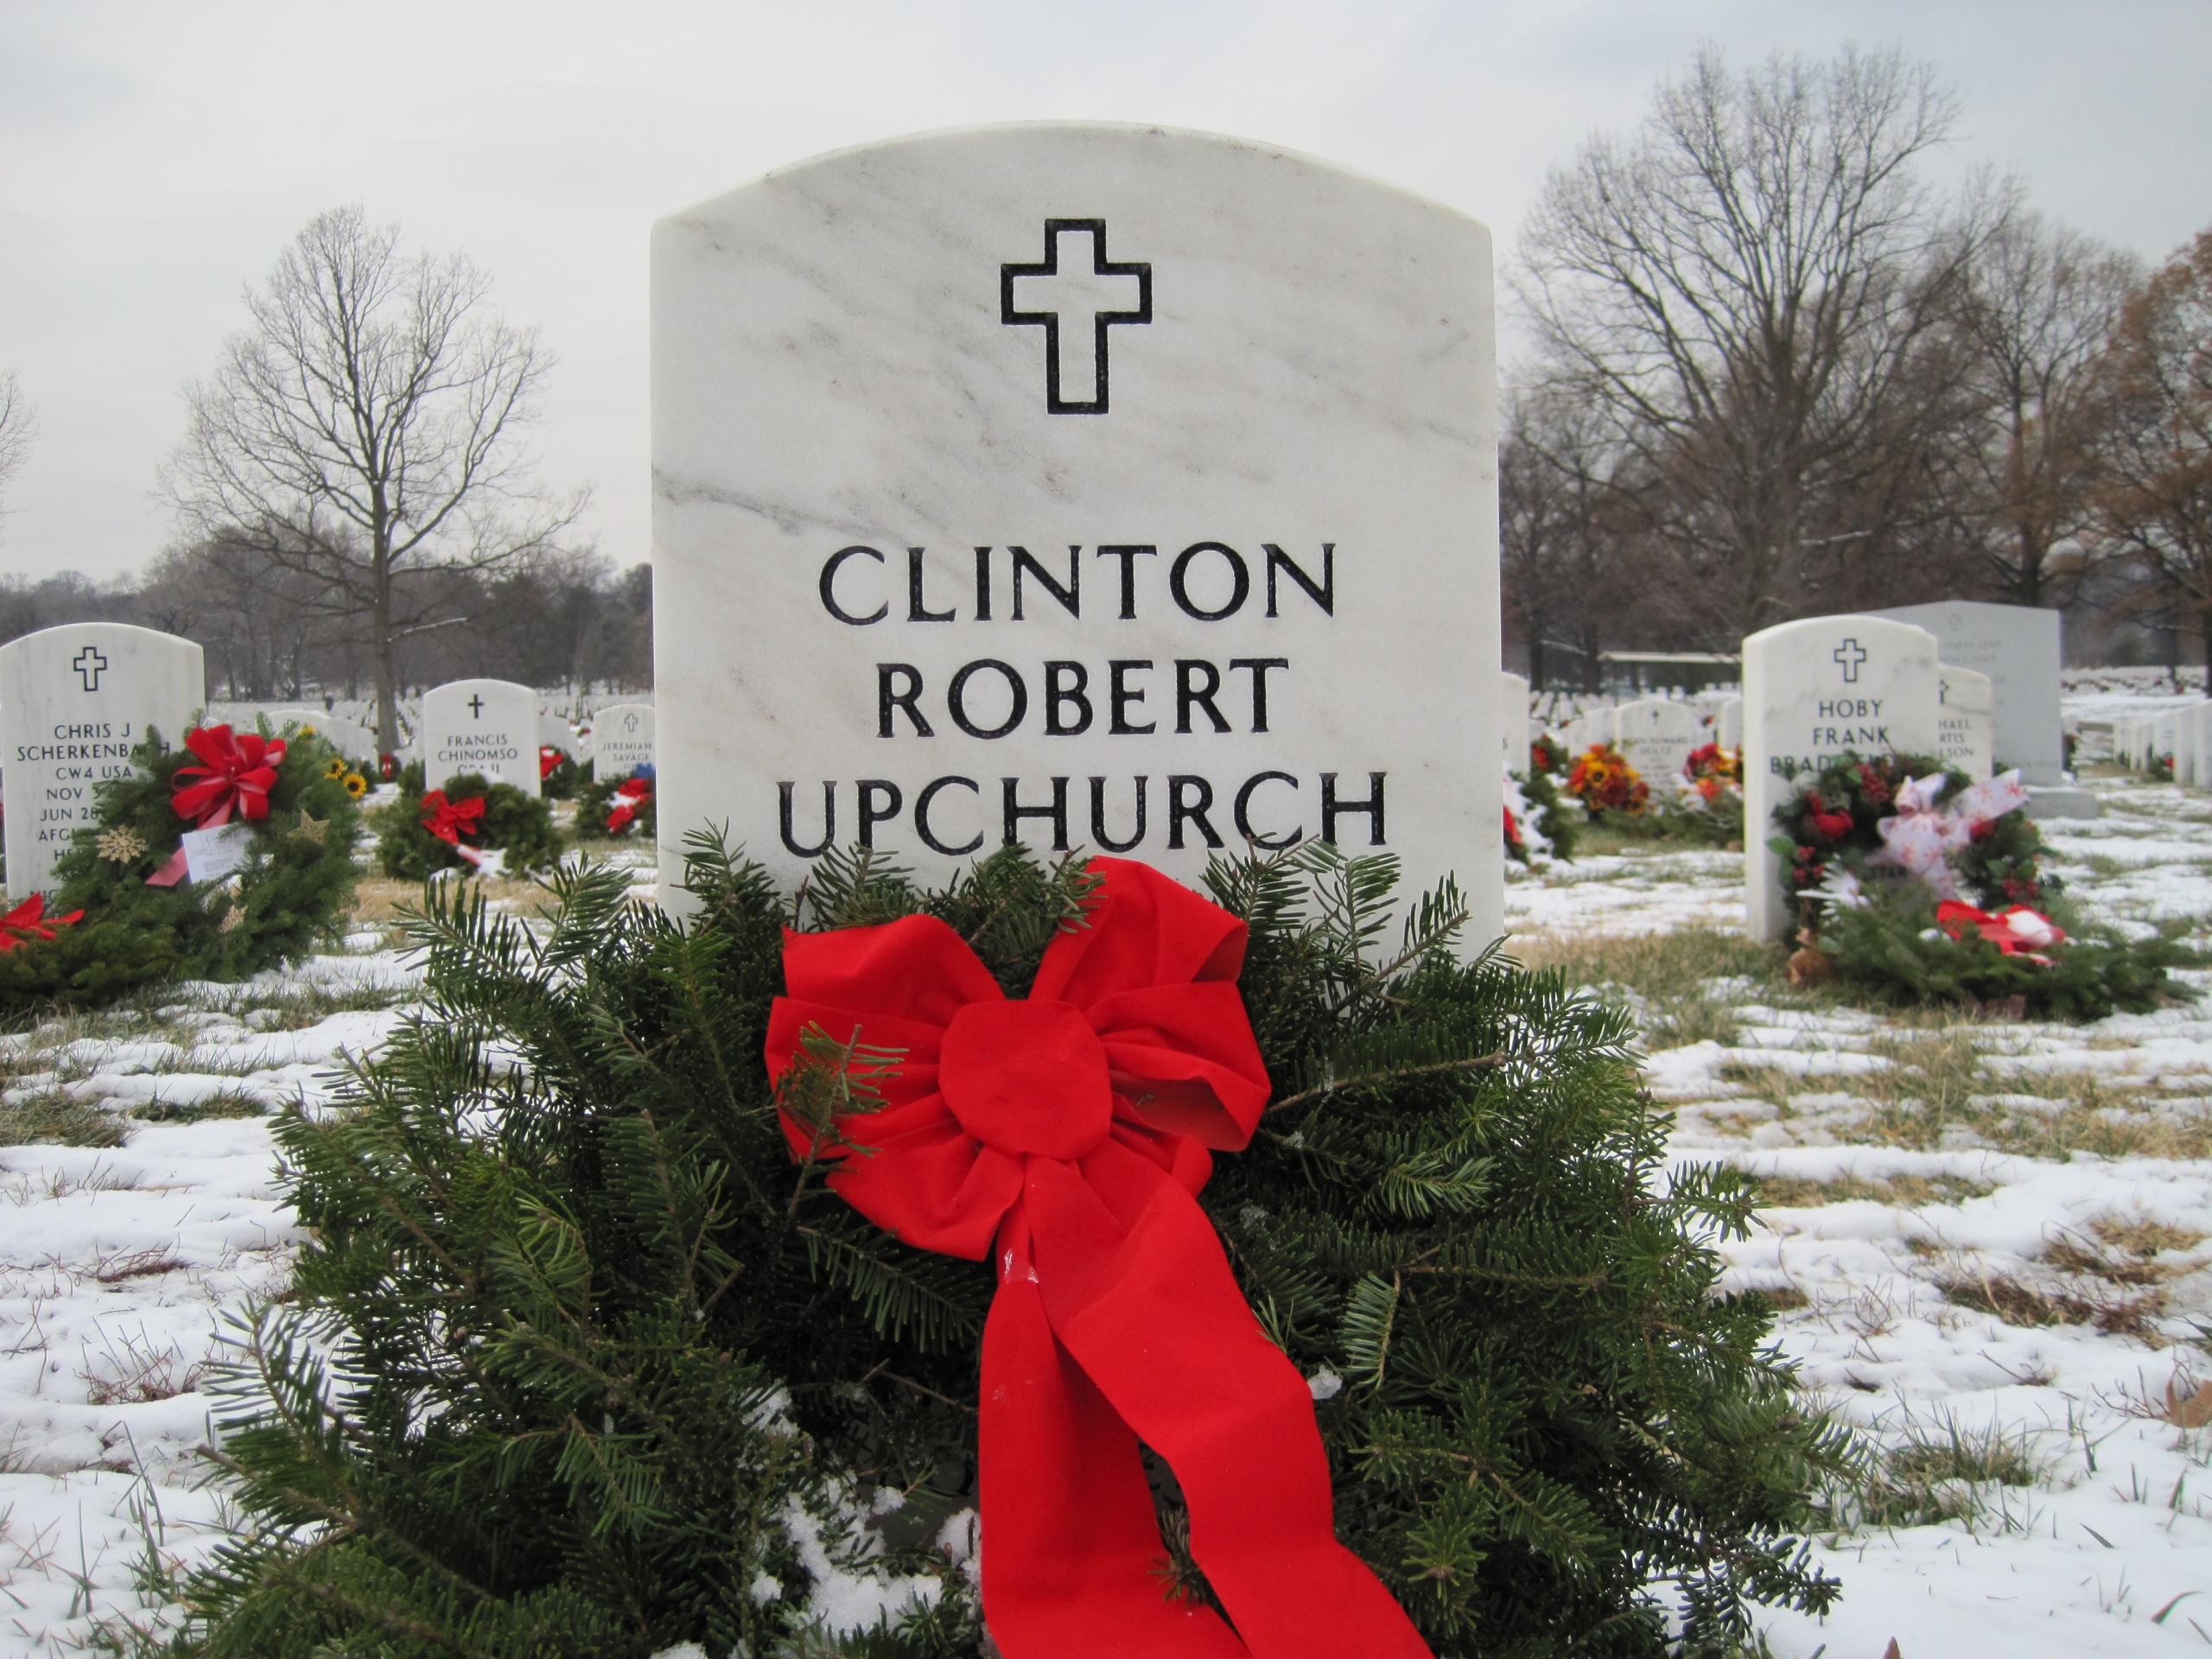 crupchurch-gravesite-photo-by-eileen-horan-december-2010-001